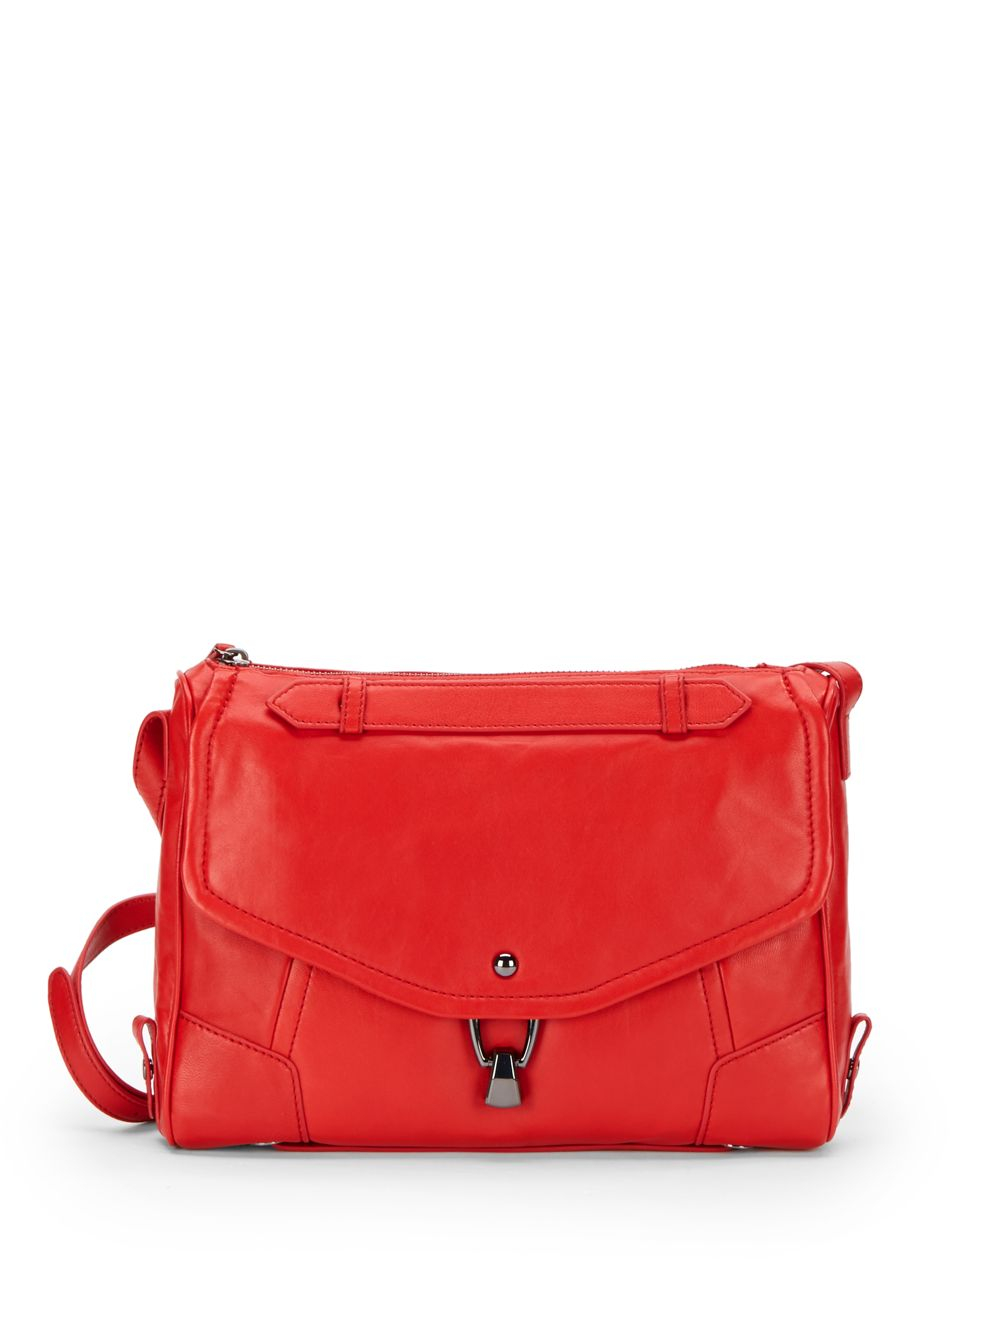 Kooba Alexa Leather Convertible Crossbody Bag in Red | Lyst